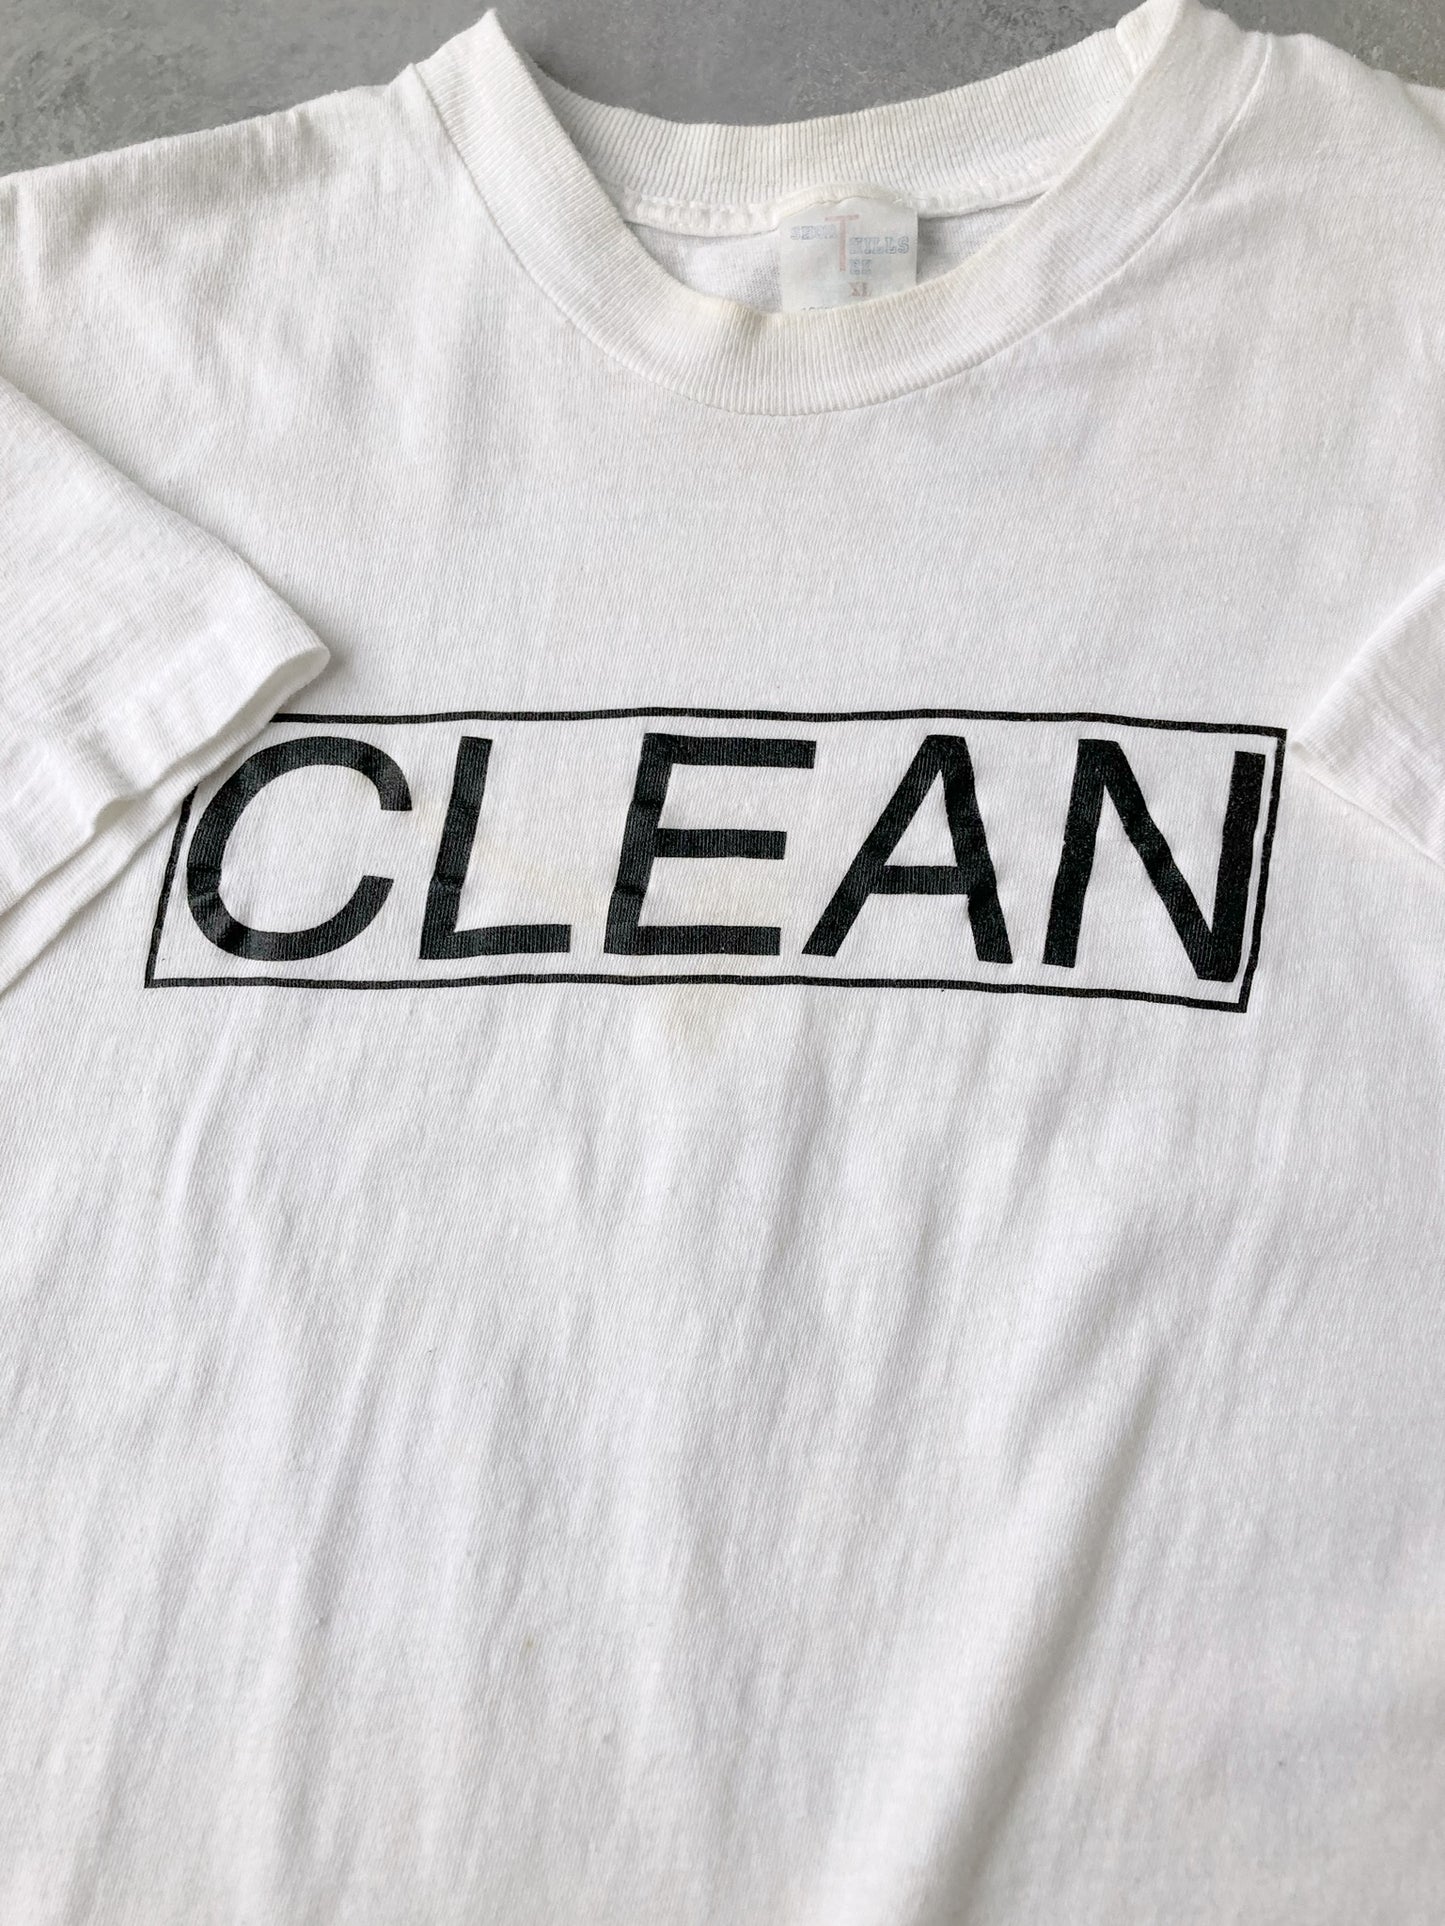 Clean Graphic T-Shirt 90's - XL